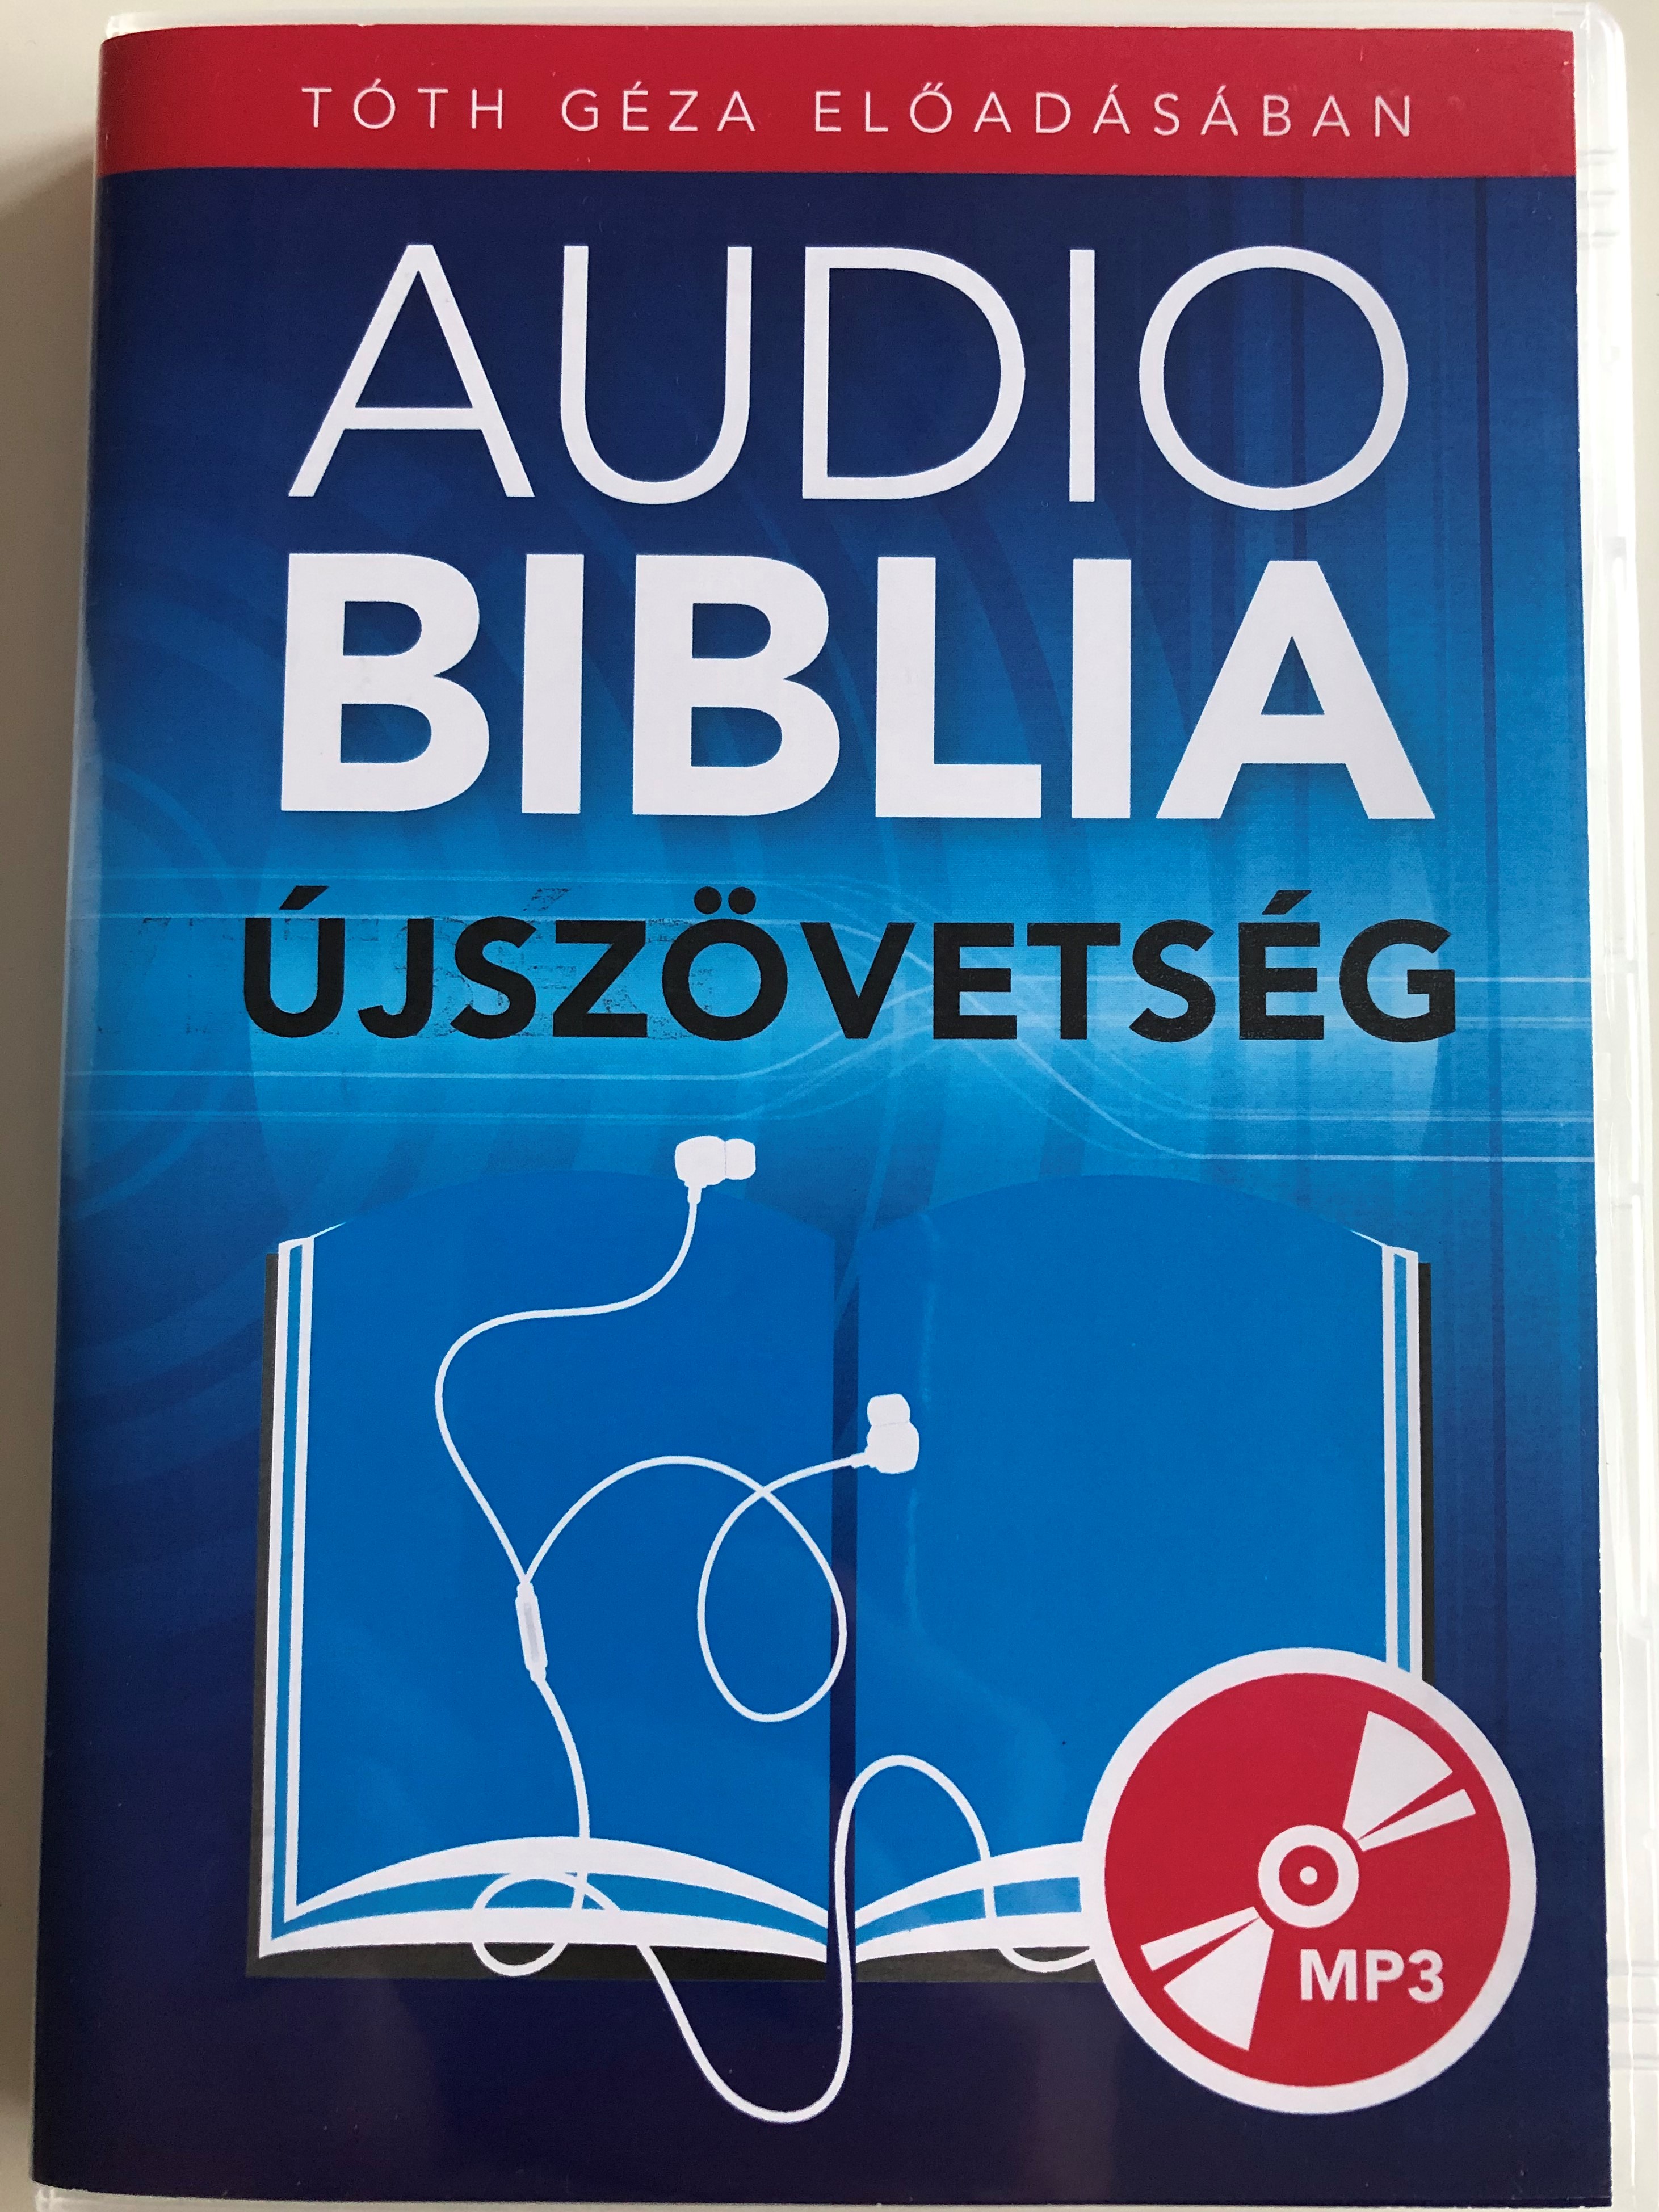 audio-biblia-mp3-cd-jsz-vets-g-hungarian-language-audio-bible-1.jpg